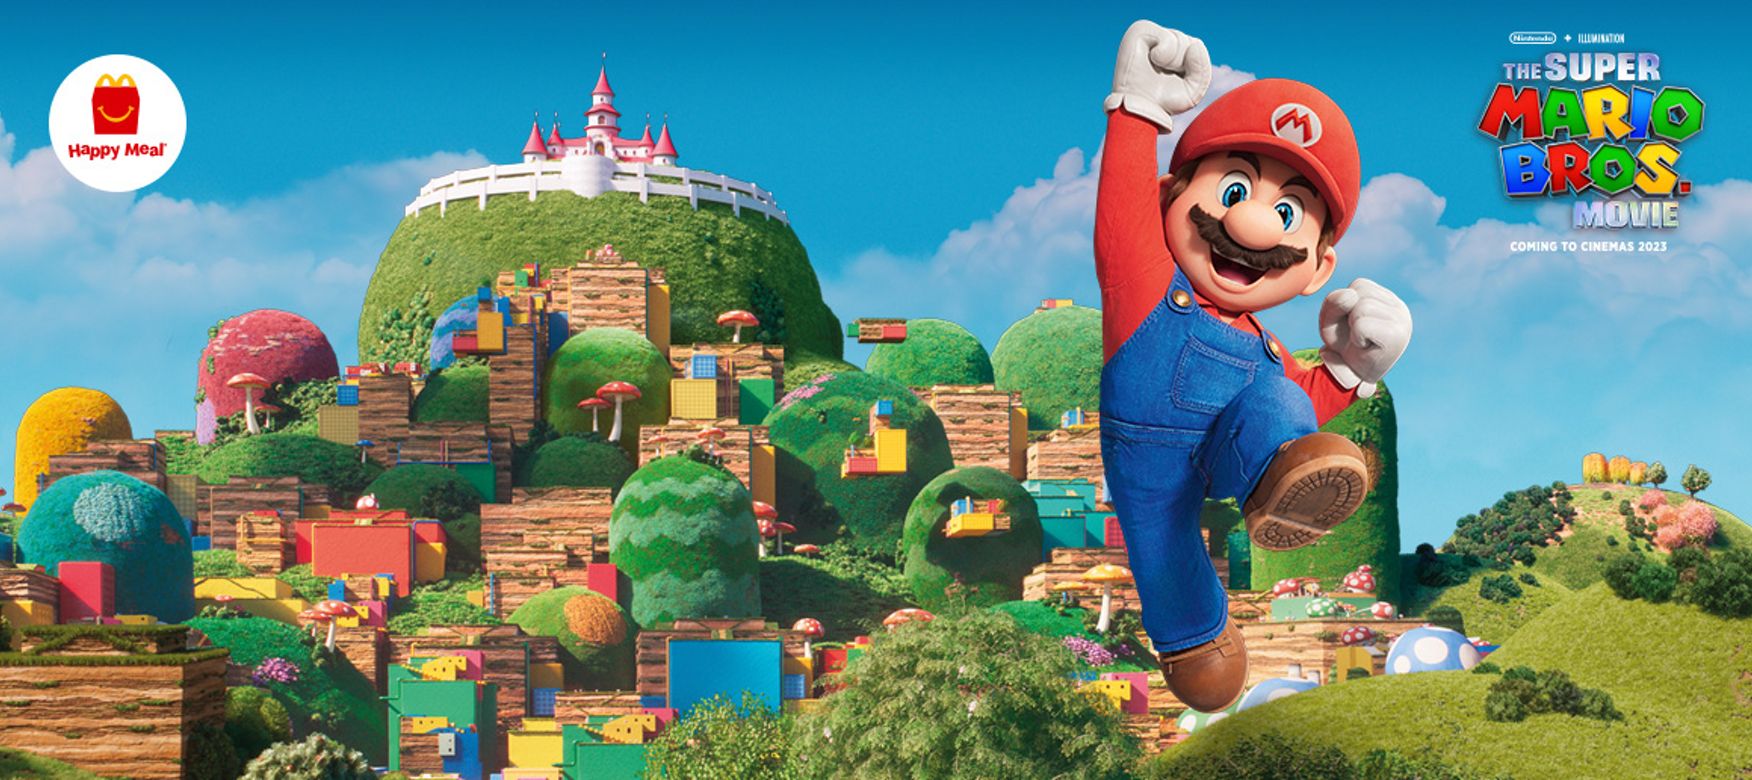 Super Mario on a Mushroom Kingdom background.